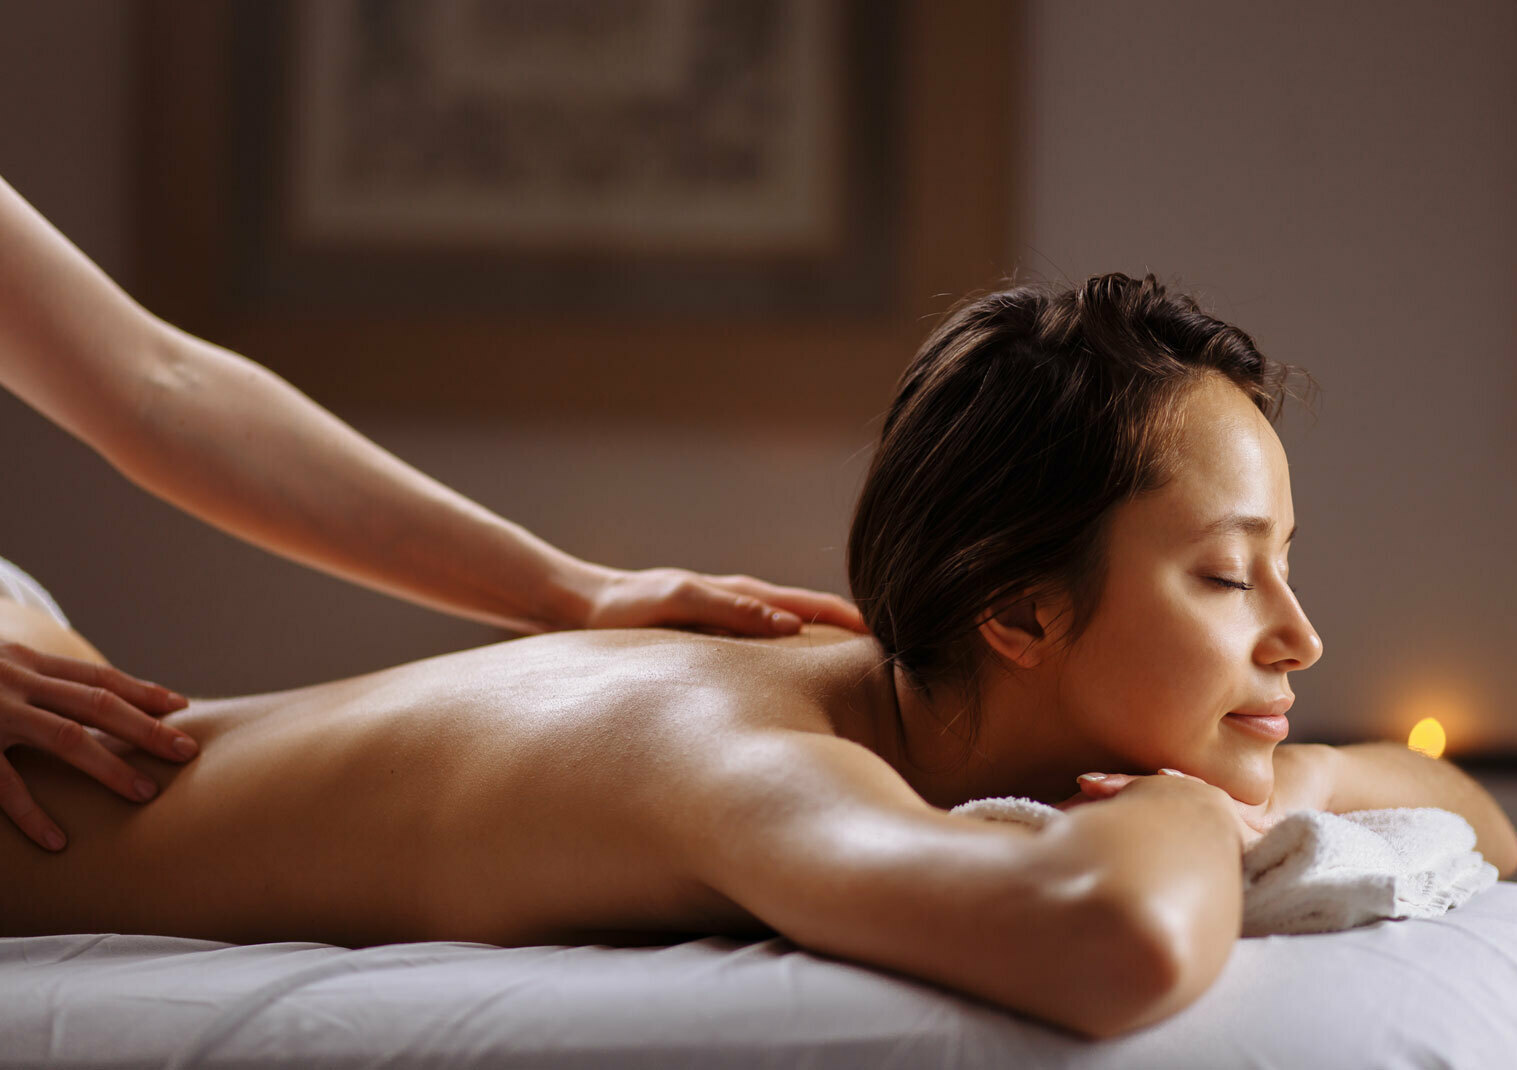 La Femme Beauty 47% off Body Exfoliation Followed by Full Body Hydrating Massage